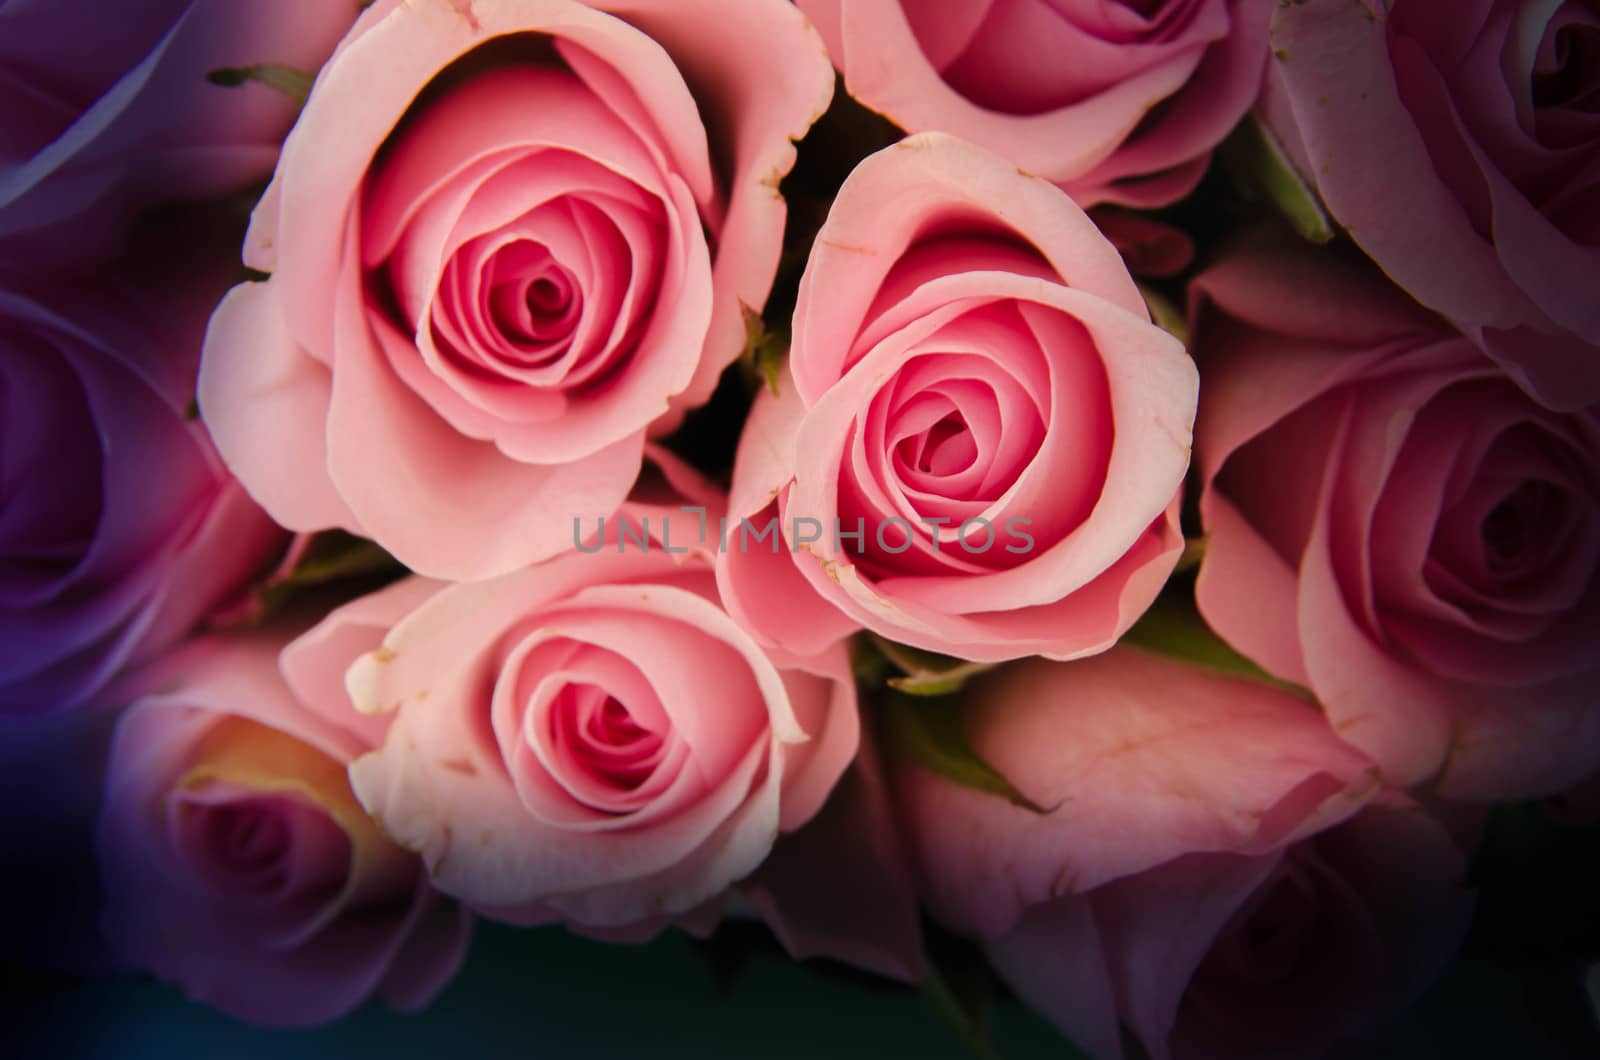 Little capules of rose by bpardofotografia